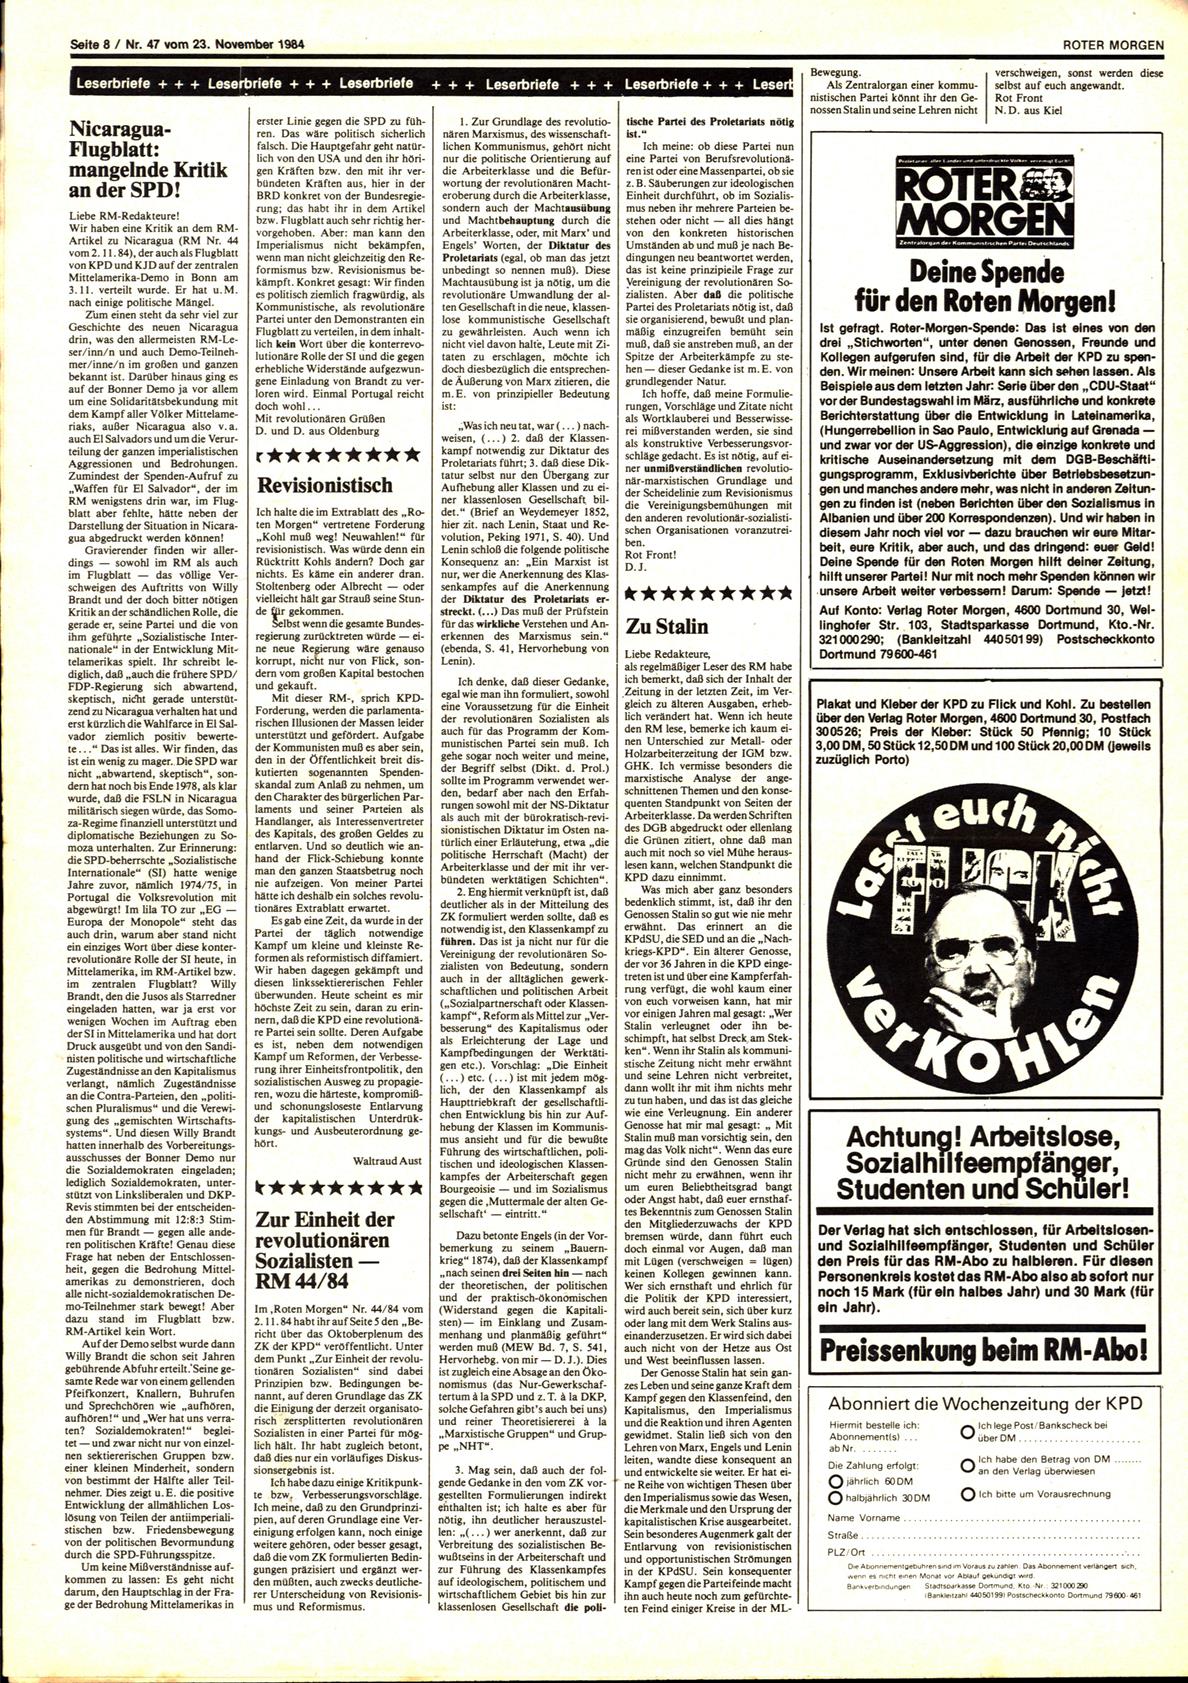 Roter Morgen, 18. Jg., 23. November 1984, Nr. 47, Seite 8